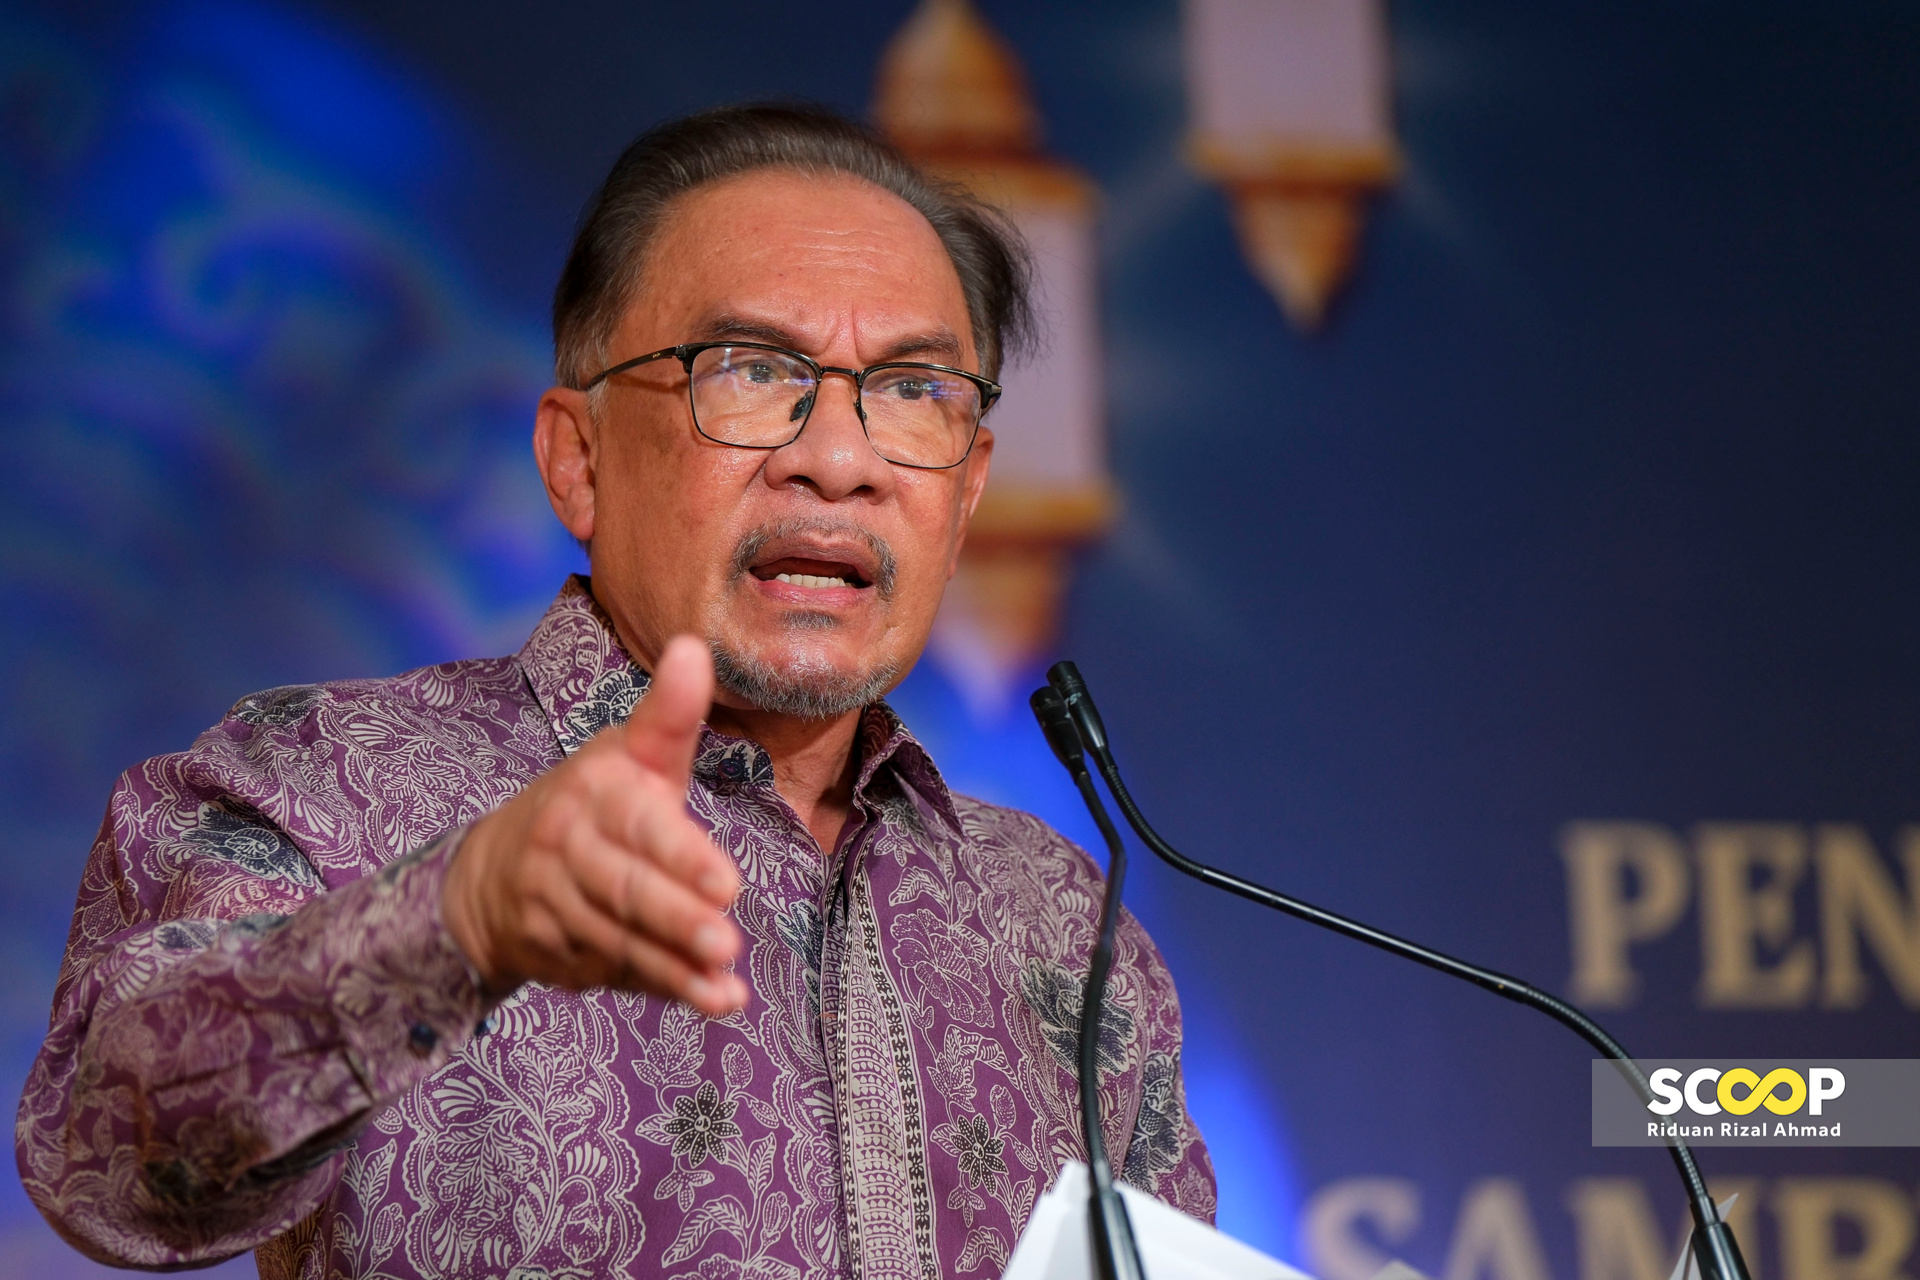 Civil service salary hike is not ‘candy’, unrelated to Kuala Kubu Baharu: Anwar